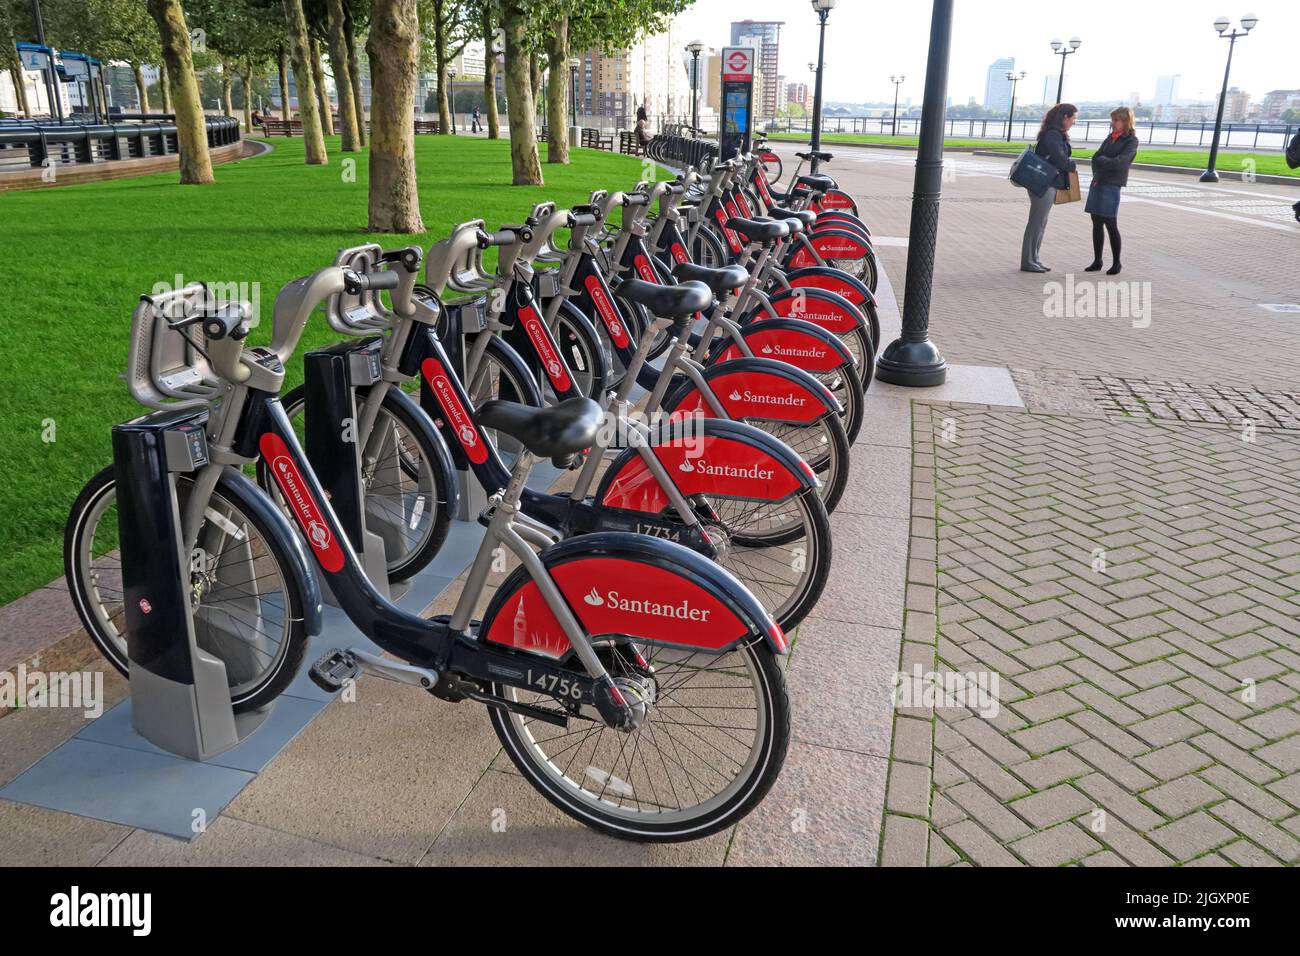 Santander, London Boris Bike Scheme, at Canary Wharf, East London, England, UK Stock Photo